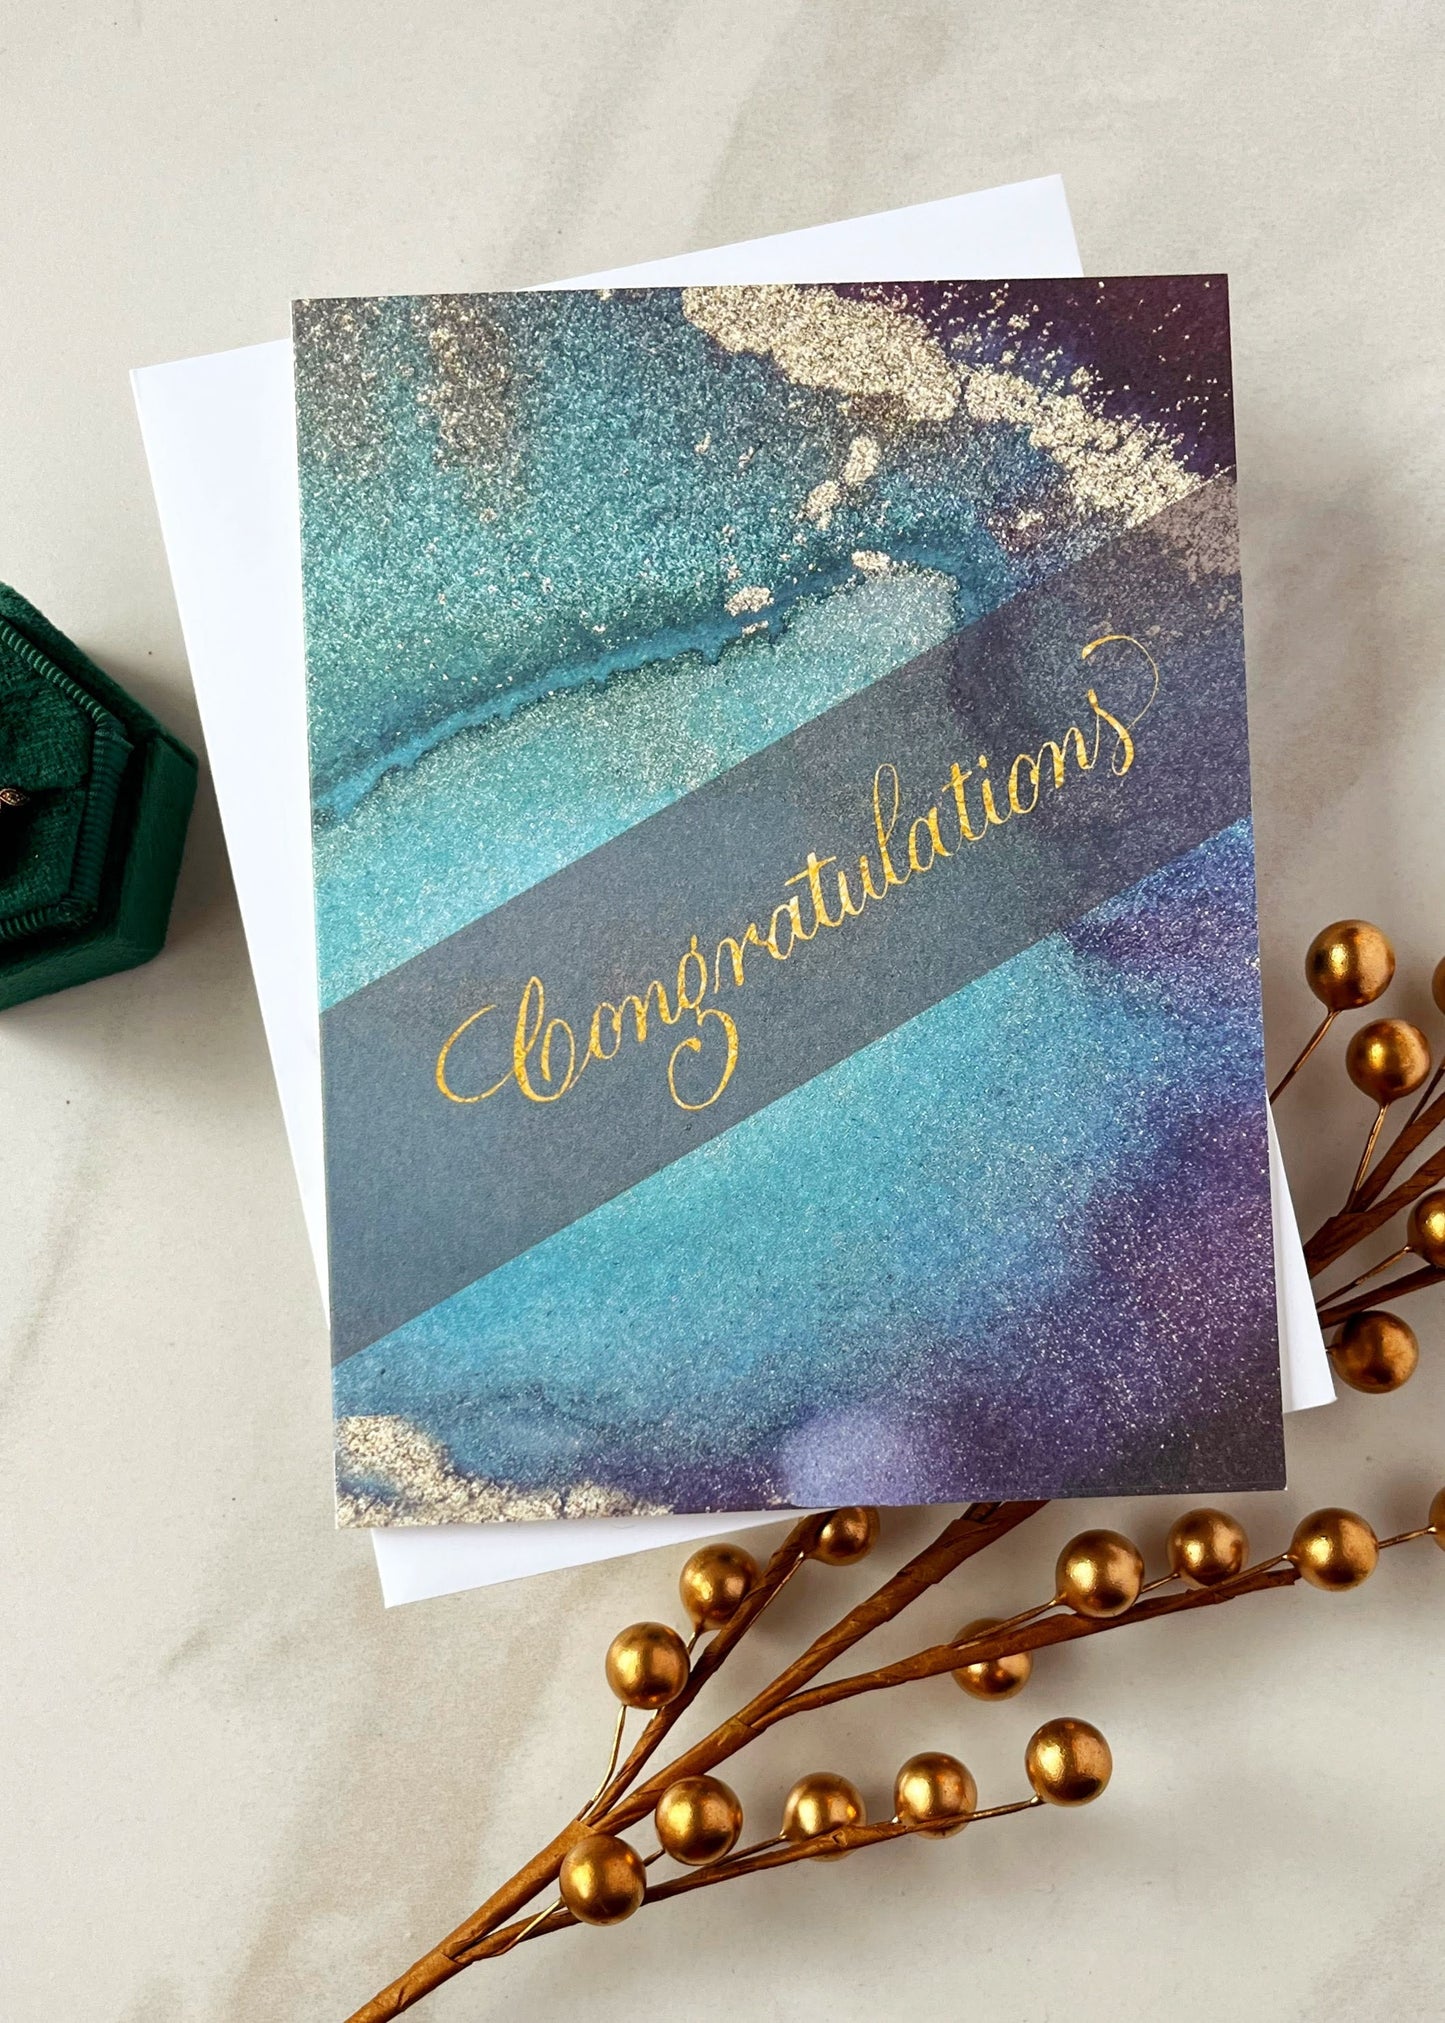 Boho wedding card | Congratulations wedding gift | Wedding Day card for her | Congratulations gift from bridesmaid | Geodes crystals